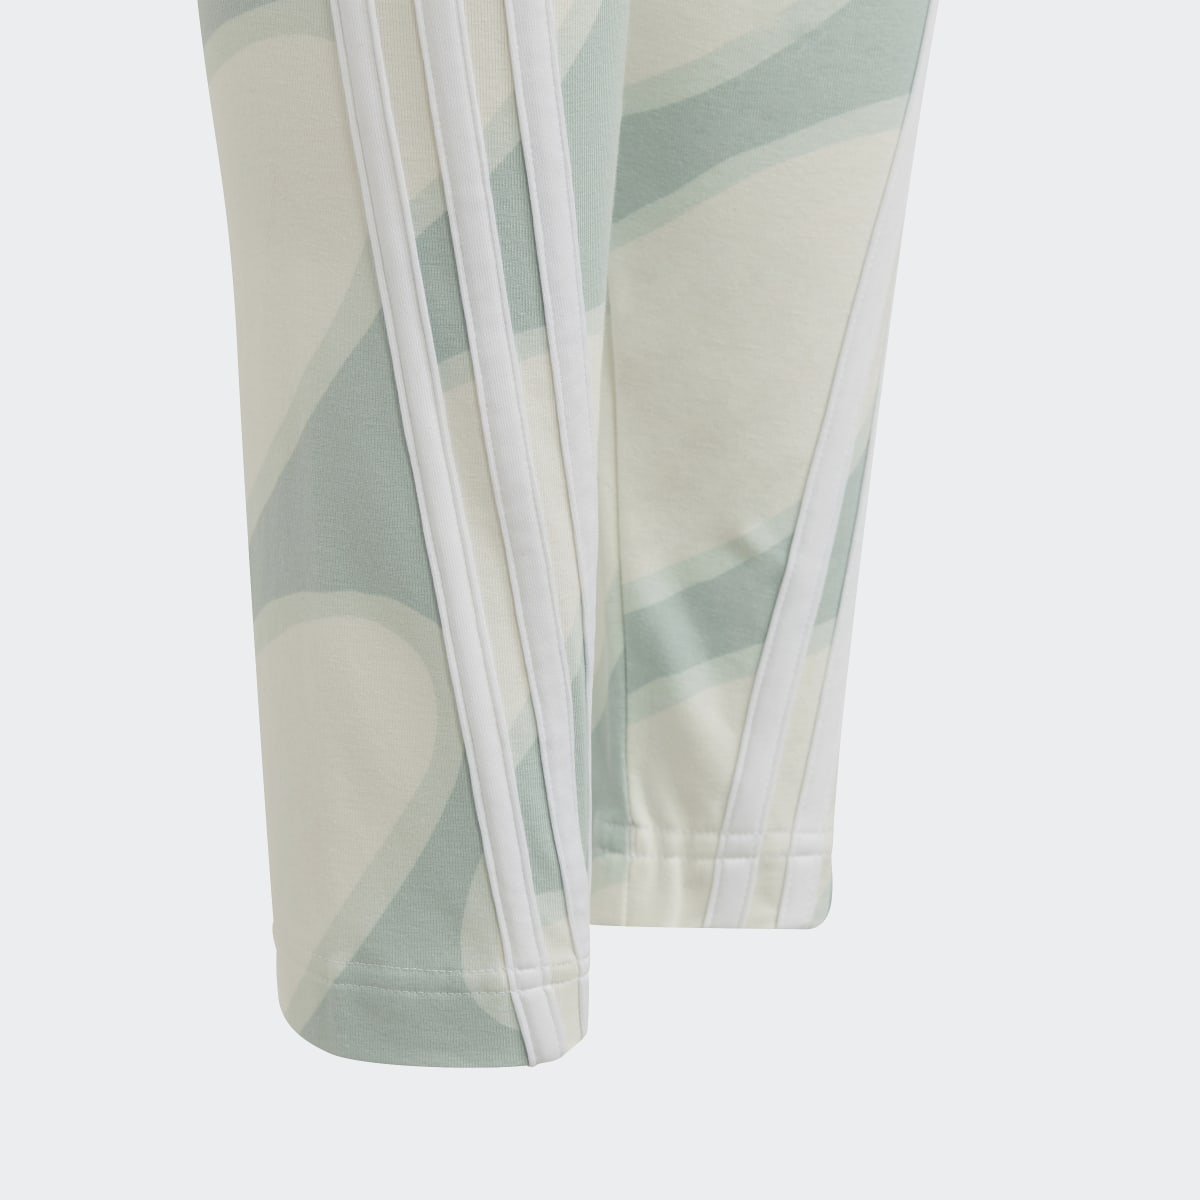 Adidas Marimekko Allover Print Cotton Tights. 4